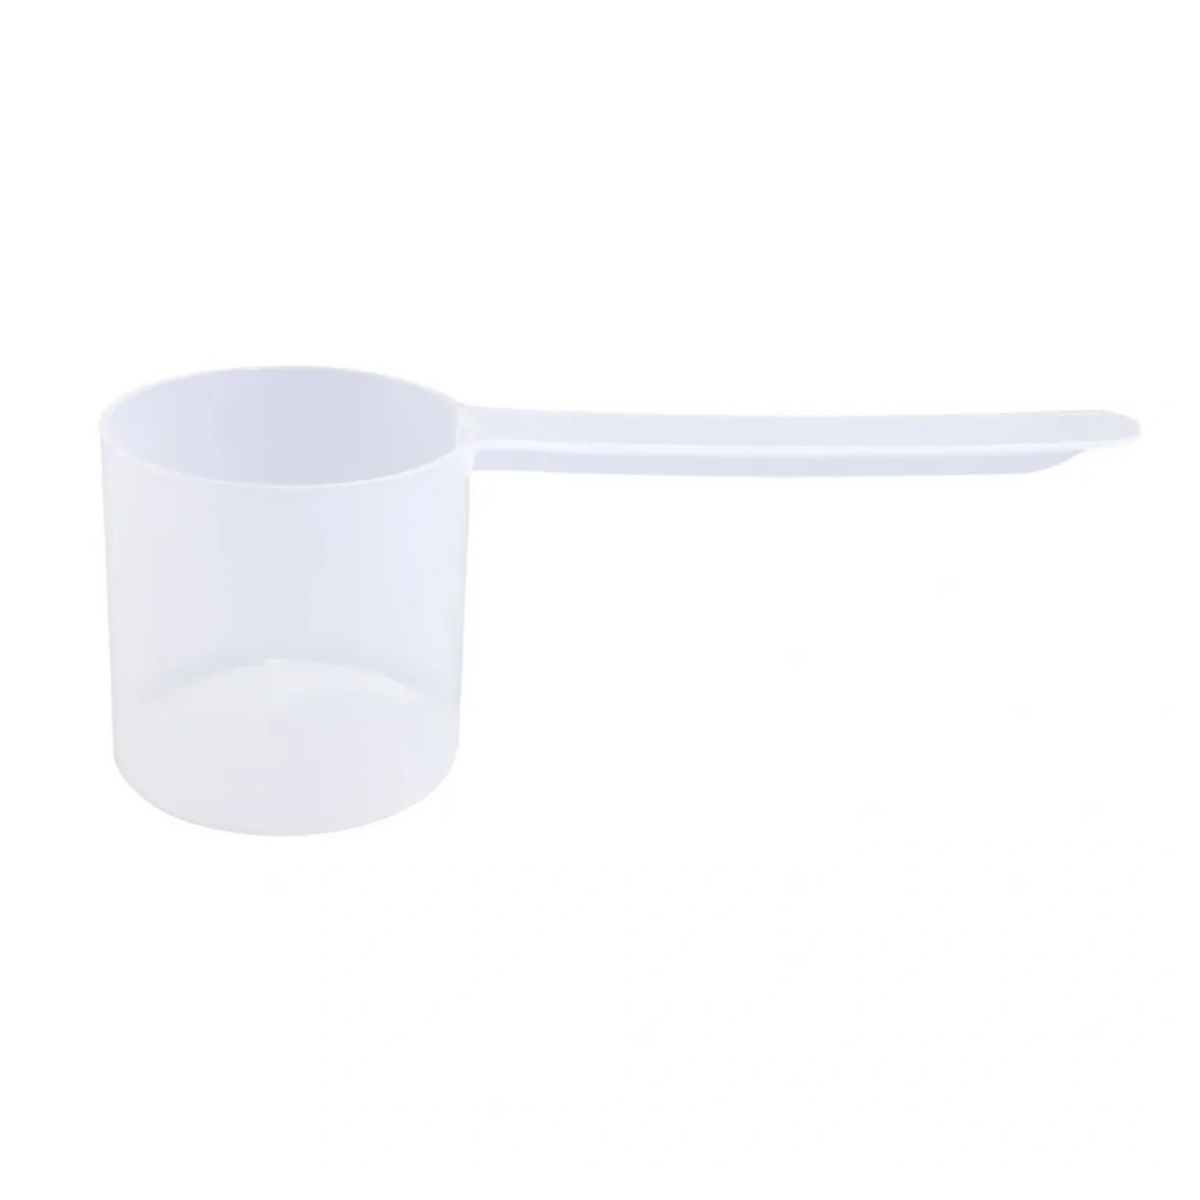 The Scoopie Plastic Measuring Scoop, 6 Tablespoon (90 cc, 3/8 Cup